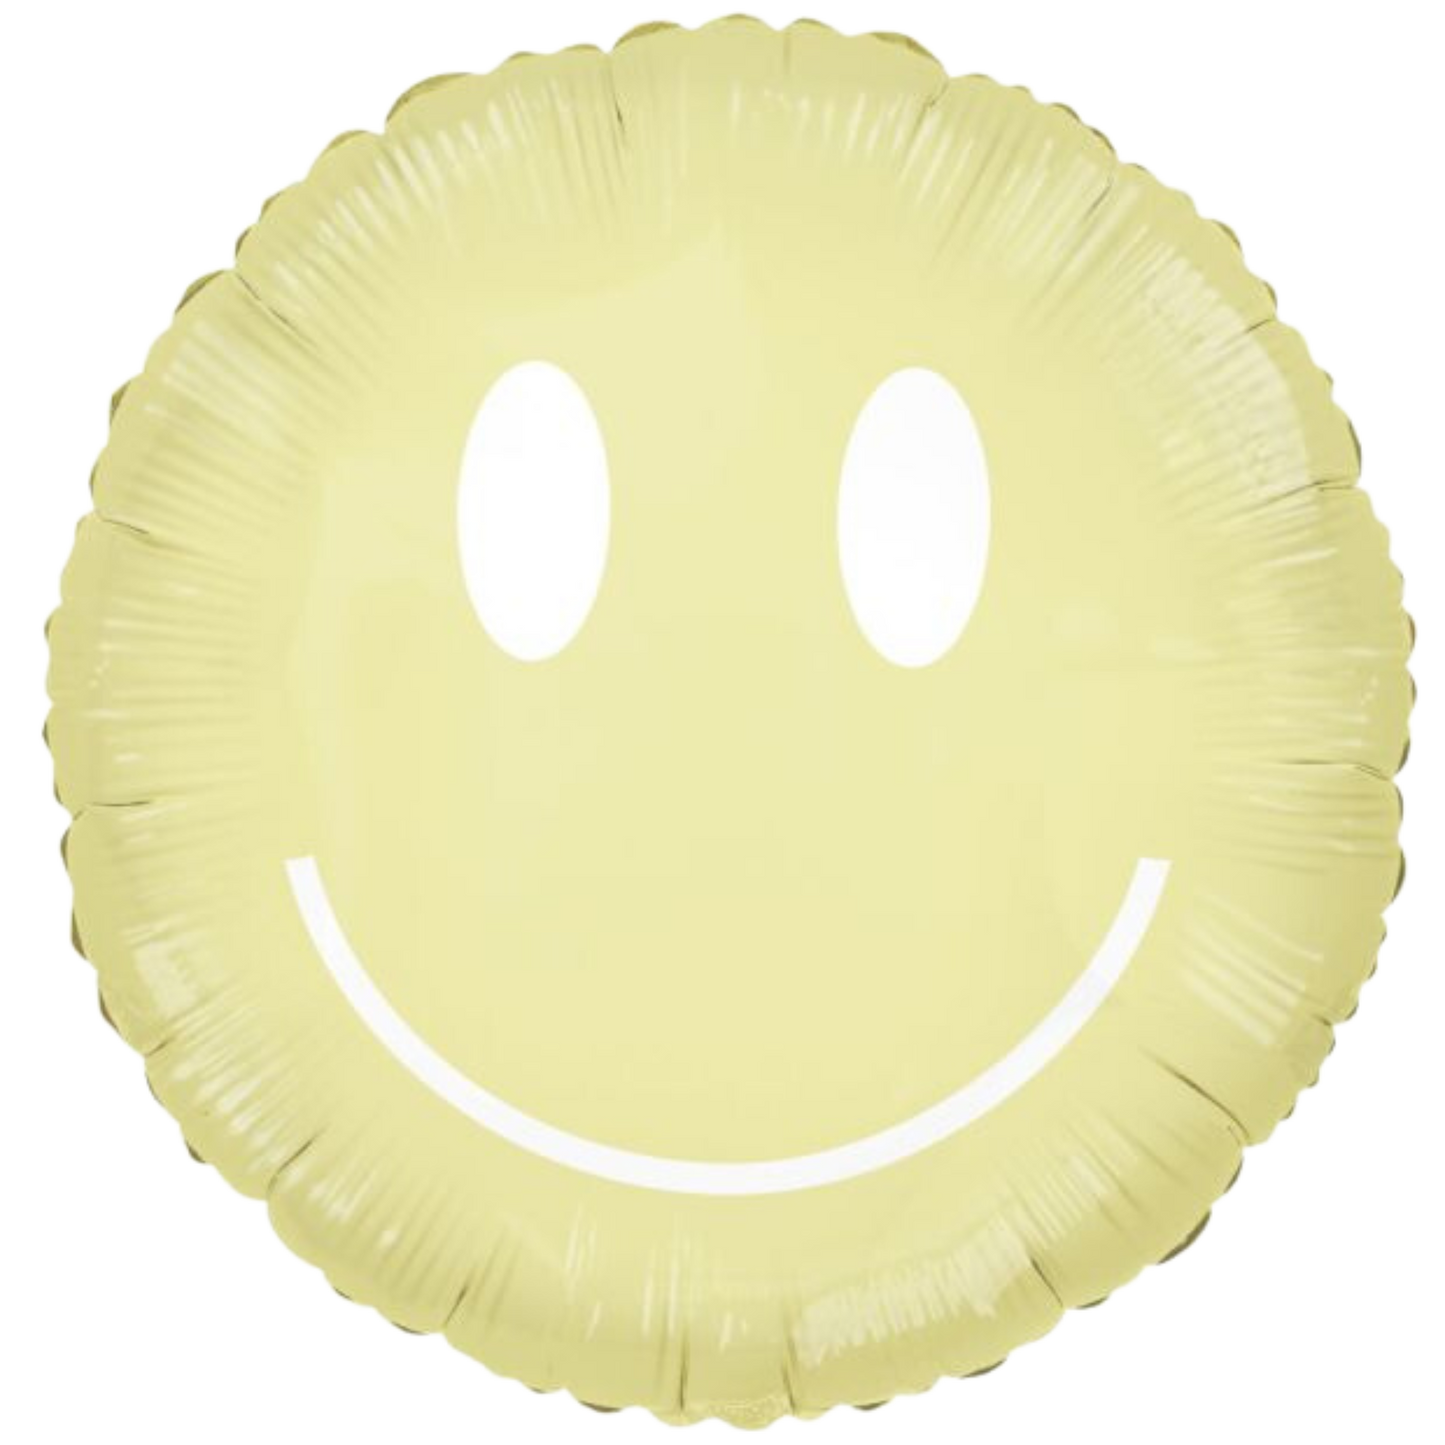 Sunny Smile